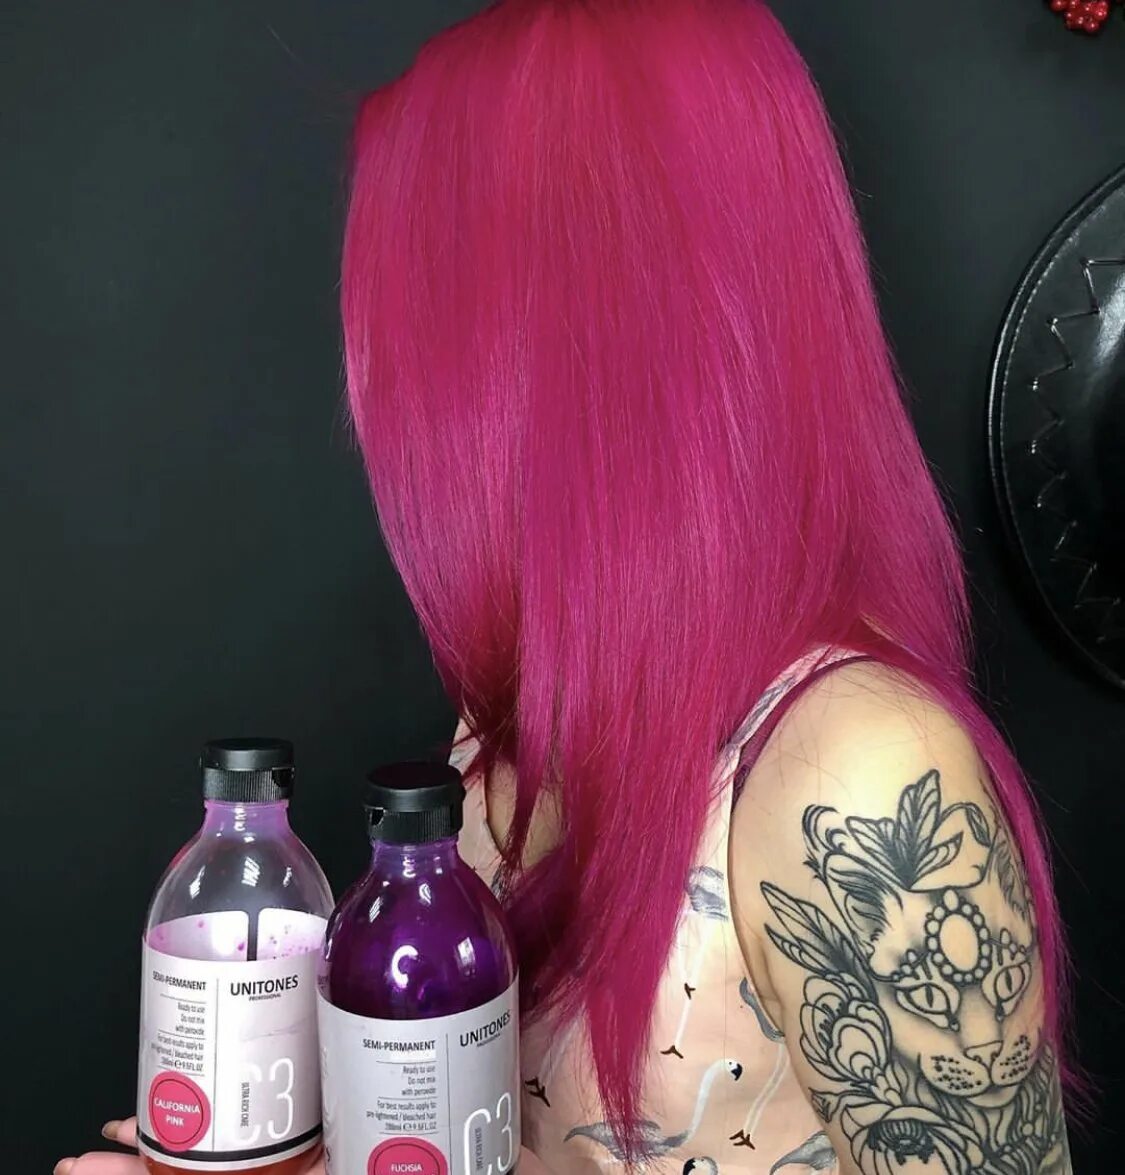 Темно розовая краска. Unitone краска. Разовая покраска для волос. Розовая краска для волос. Рощовая краска длятволос.